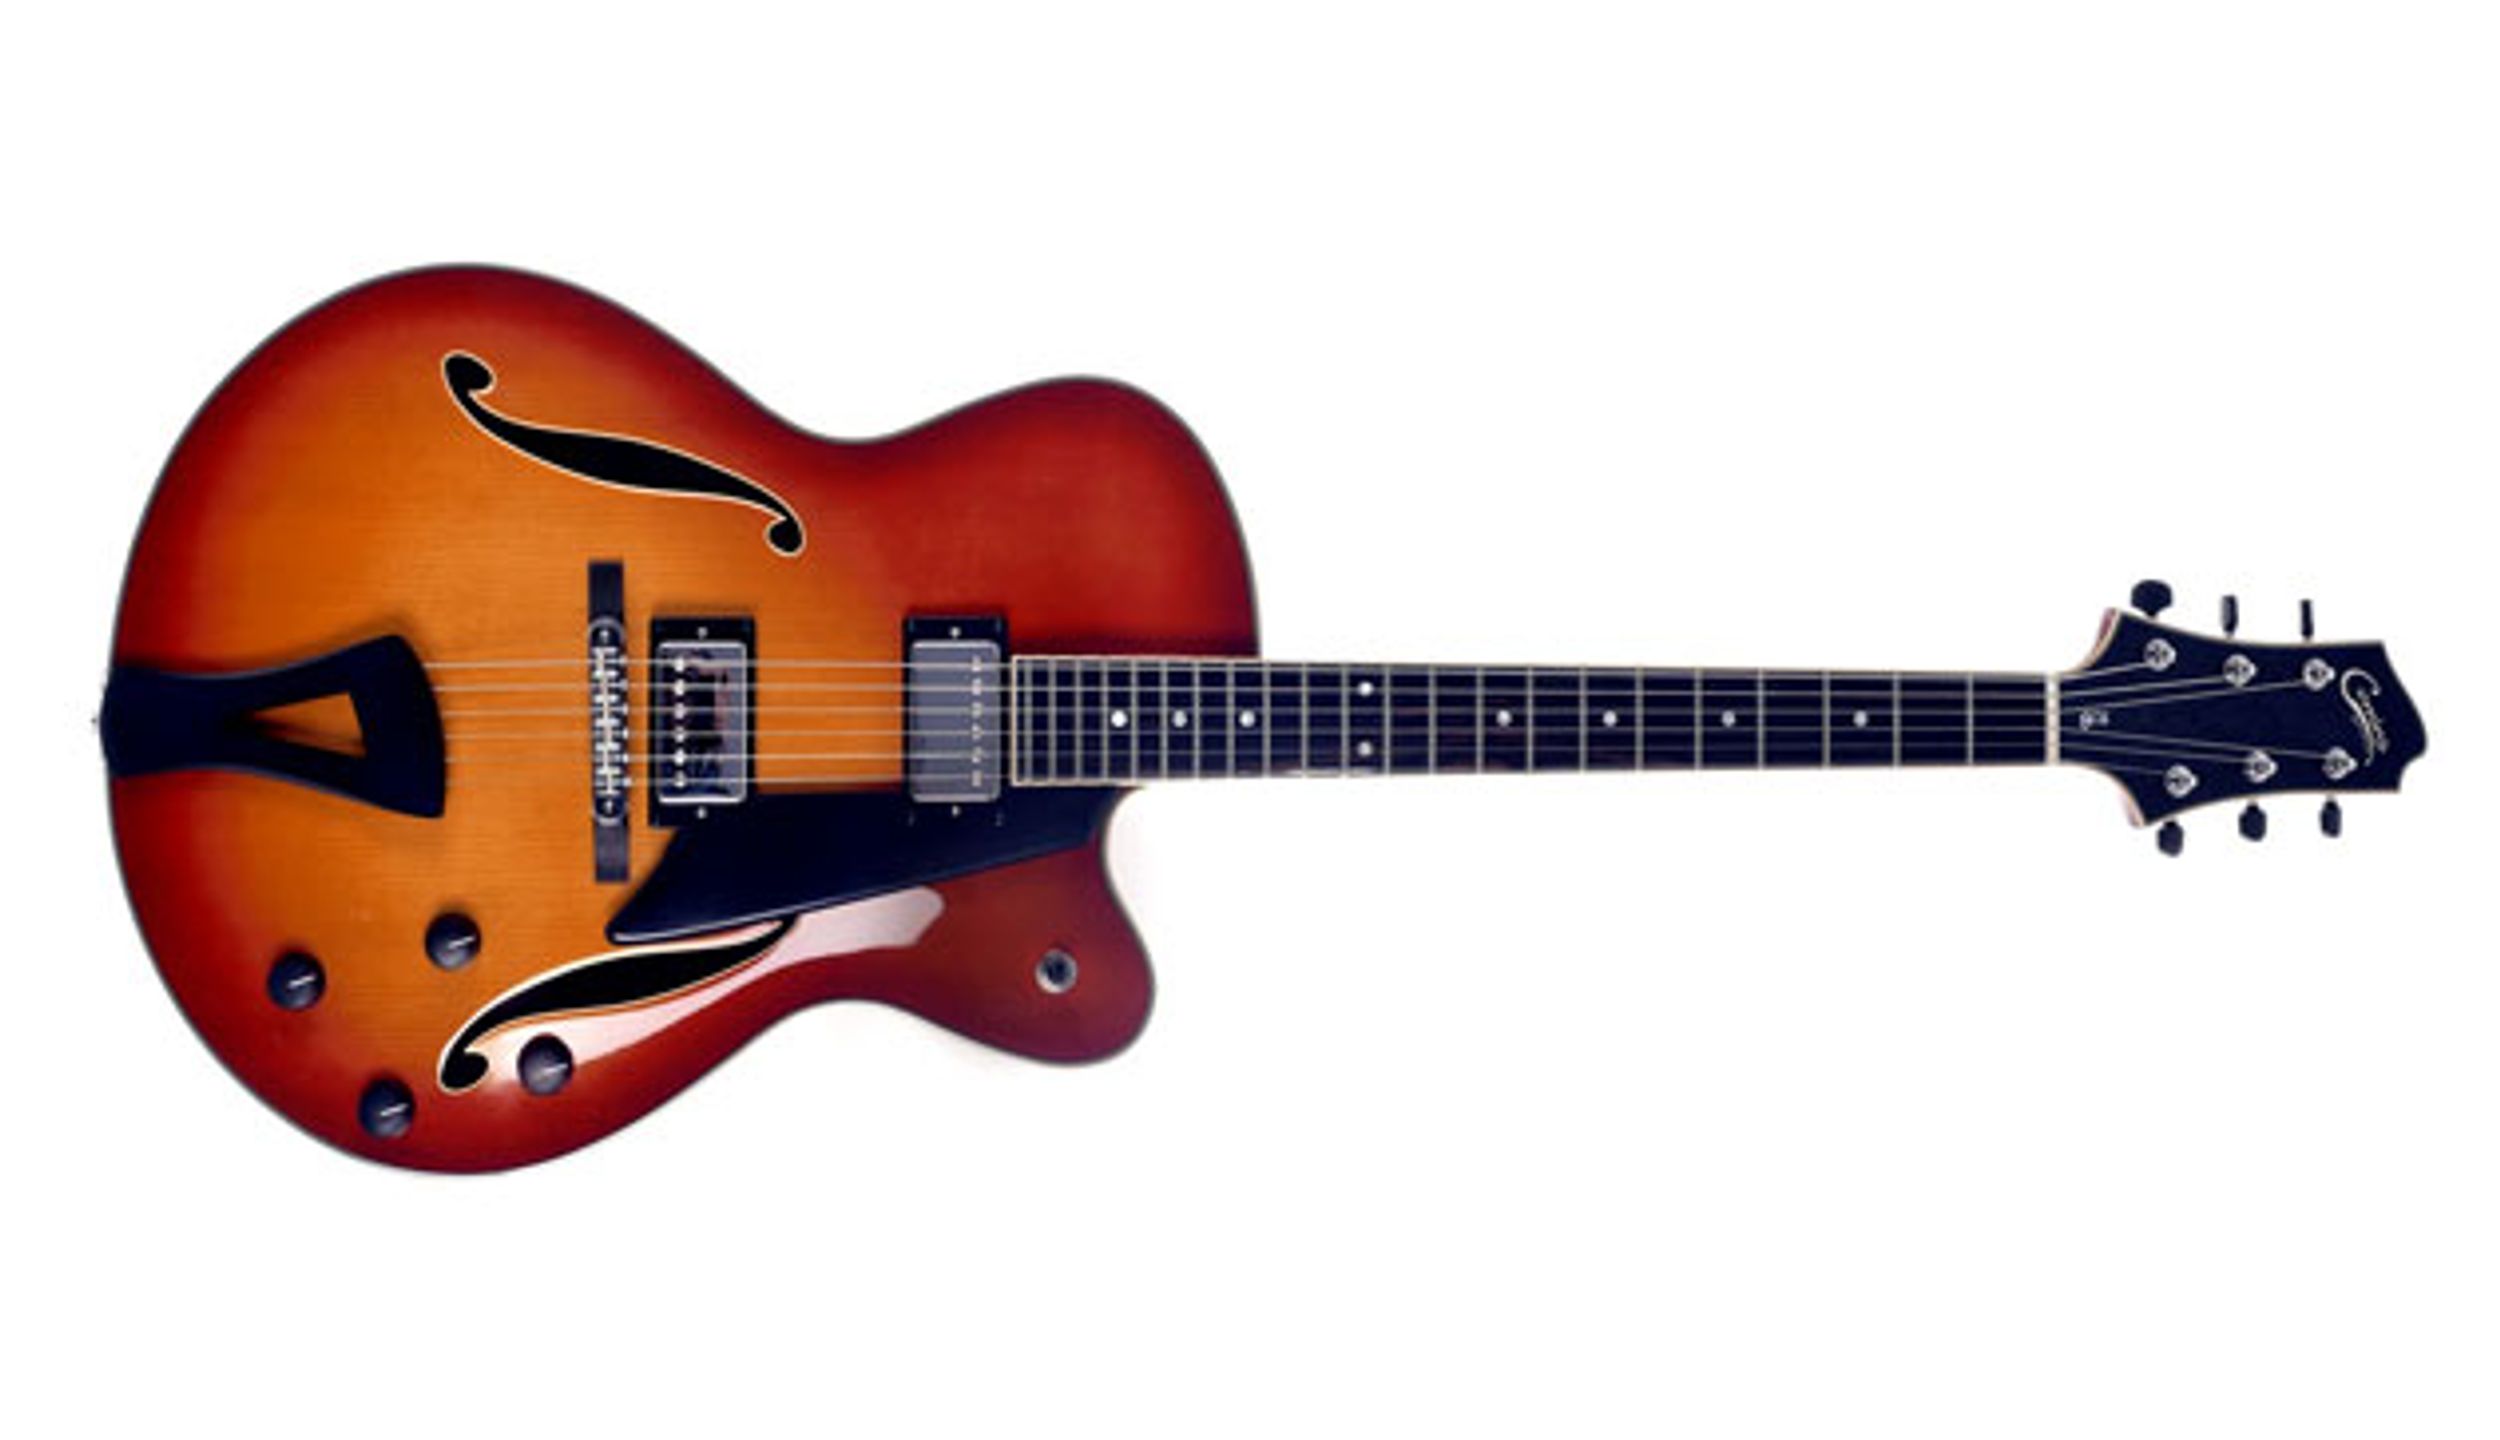 Comins Guitars Introduces the GCS-16 Archtop Guitar